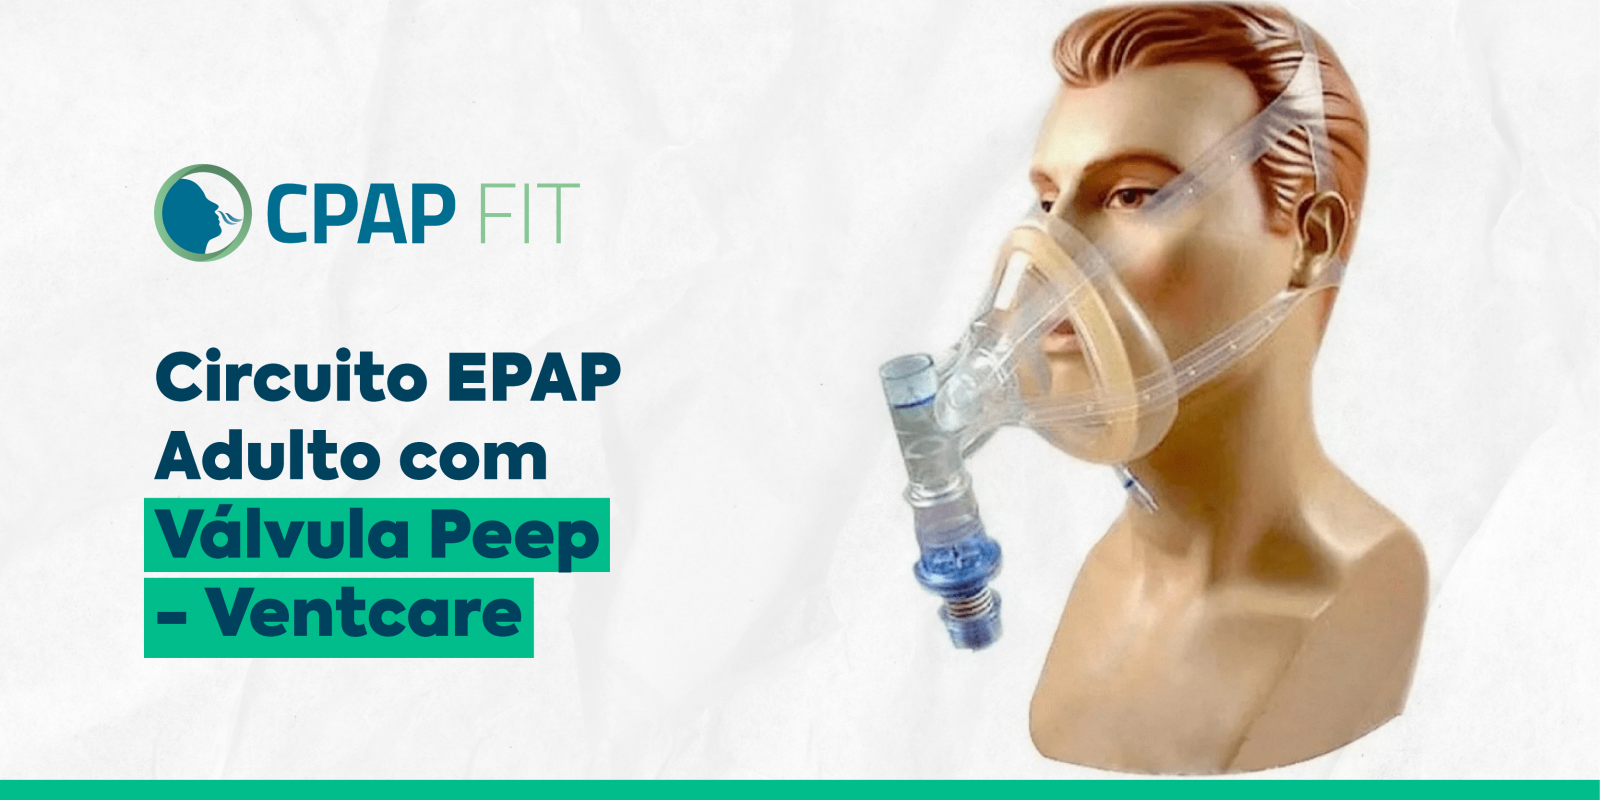 Circuito EPAP Adulto com Válvula Peep - Ventcare